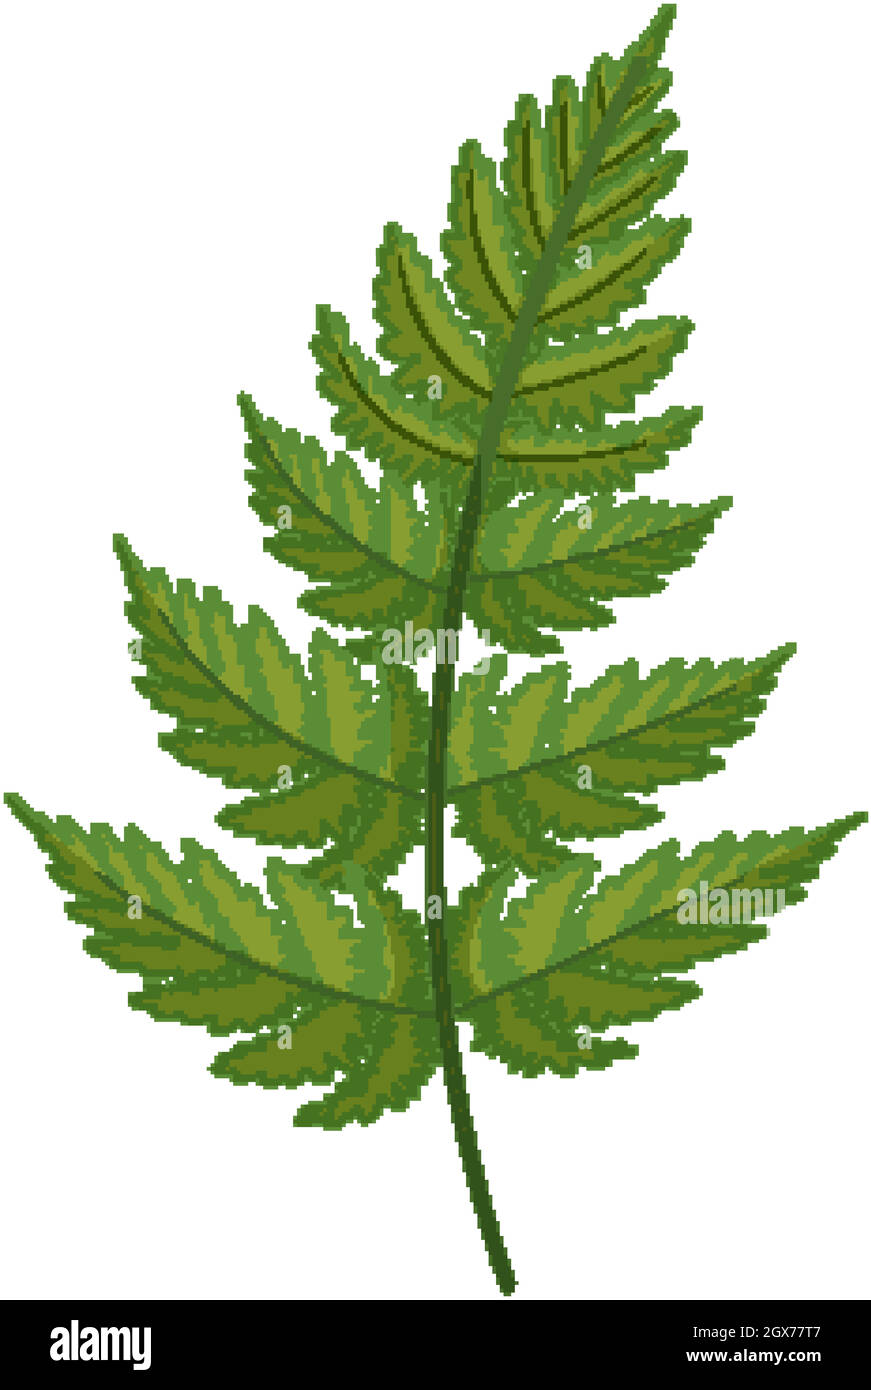 Fern leaf in cartoon style isolated Stock Vector